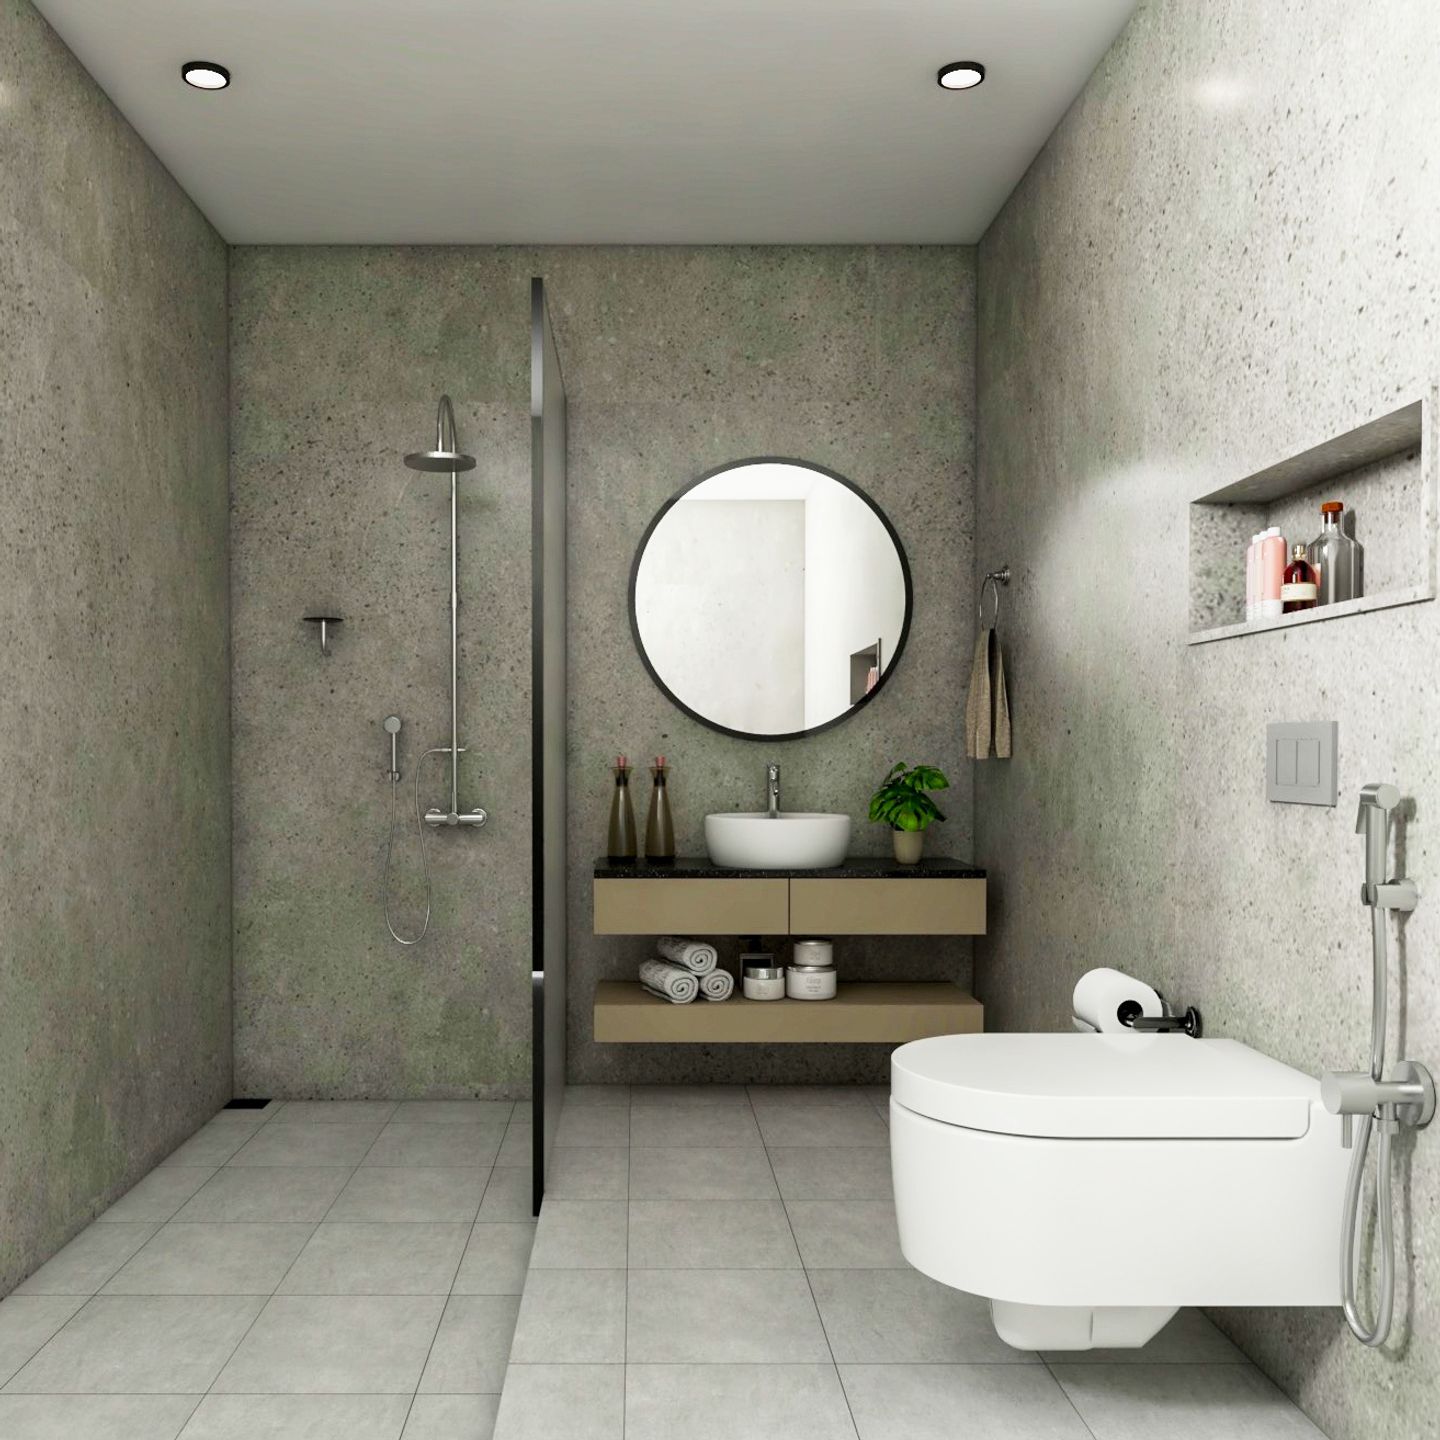 Bathroom Interior Design With Open Storage - Livspace